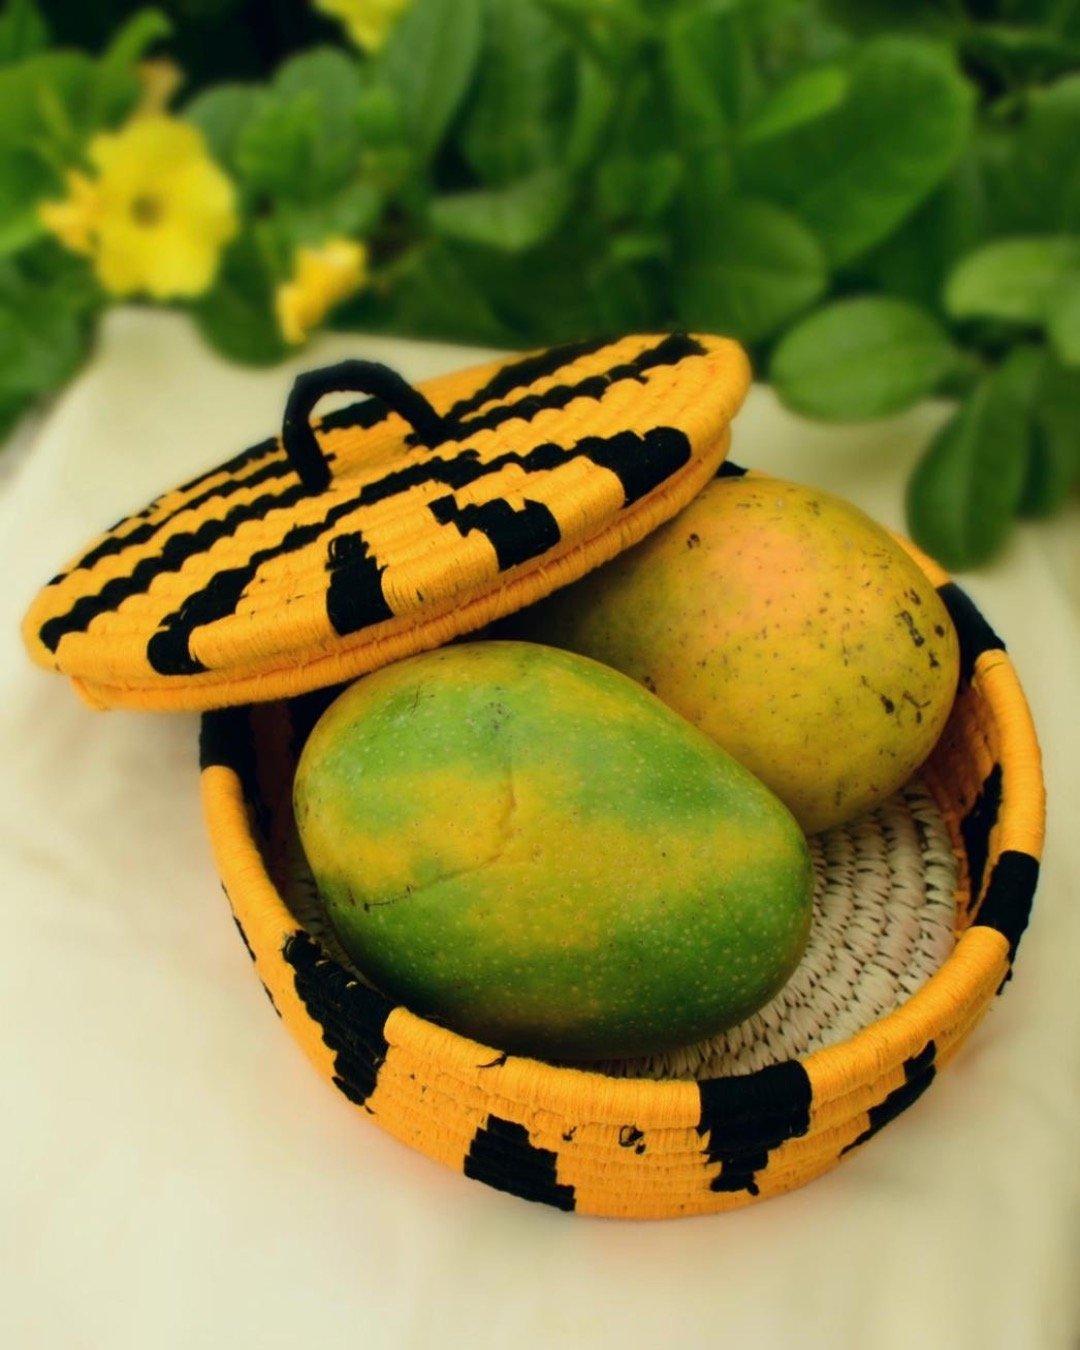 Tiger print Sabai grass lidded basket or box with mangoes